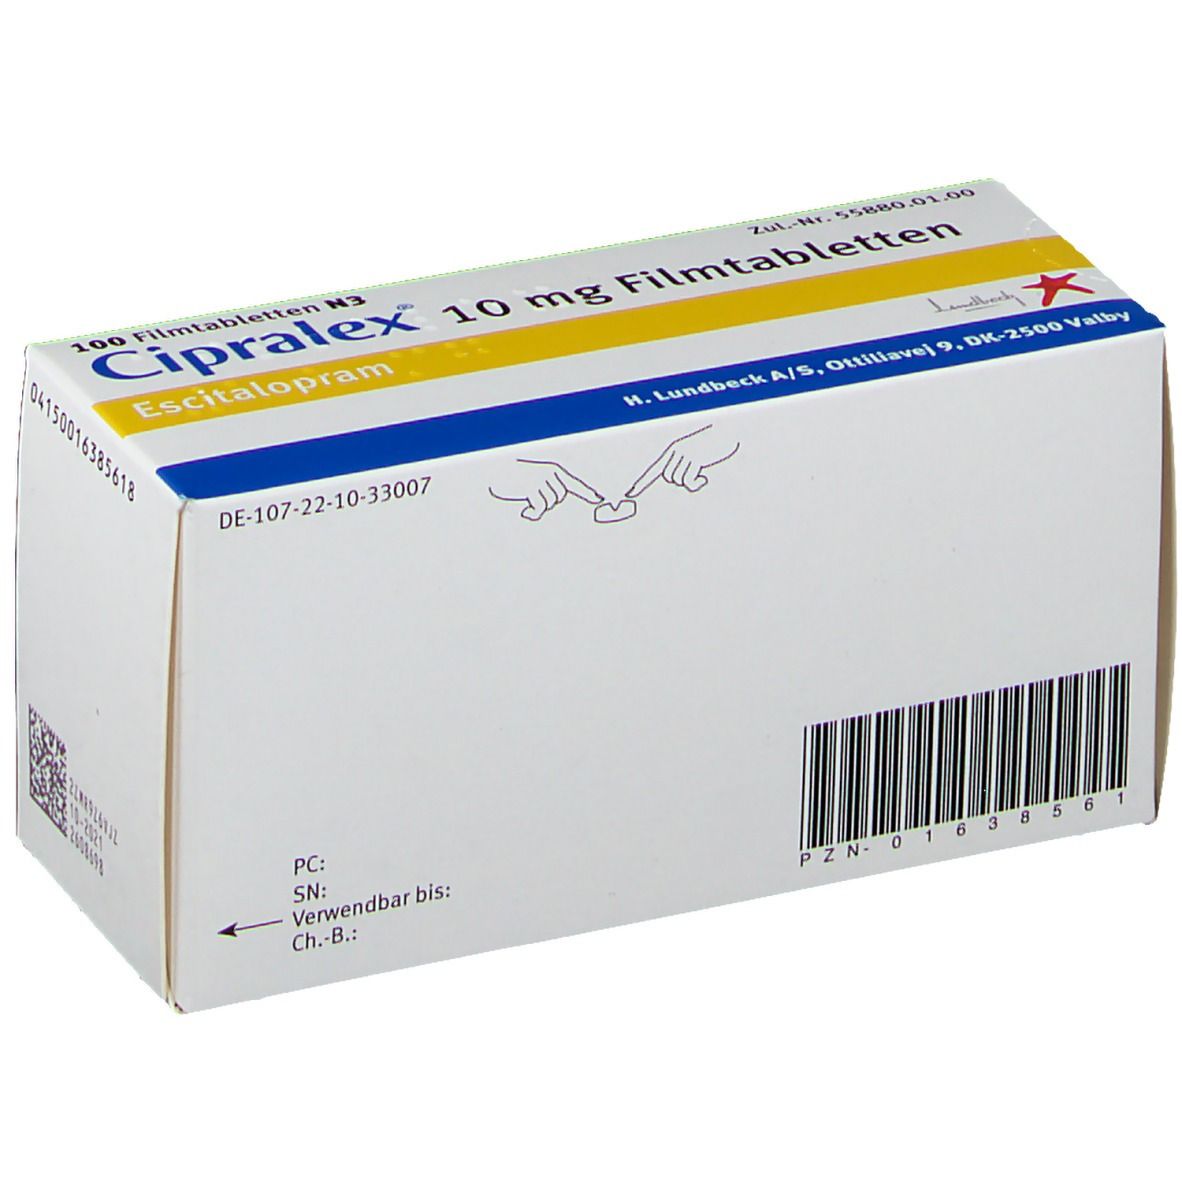 Cipralex® 10 mg